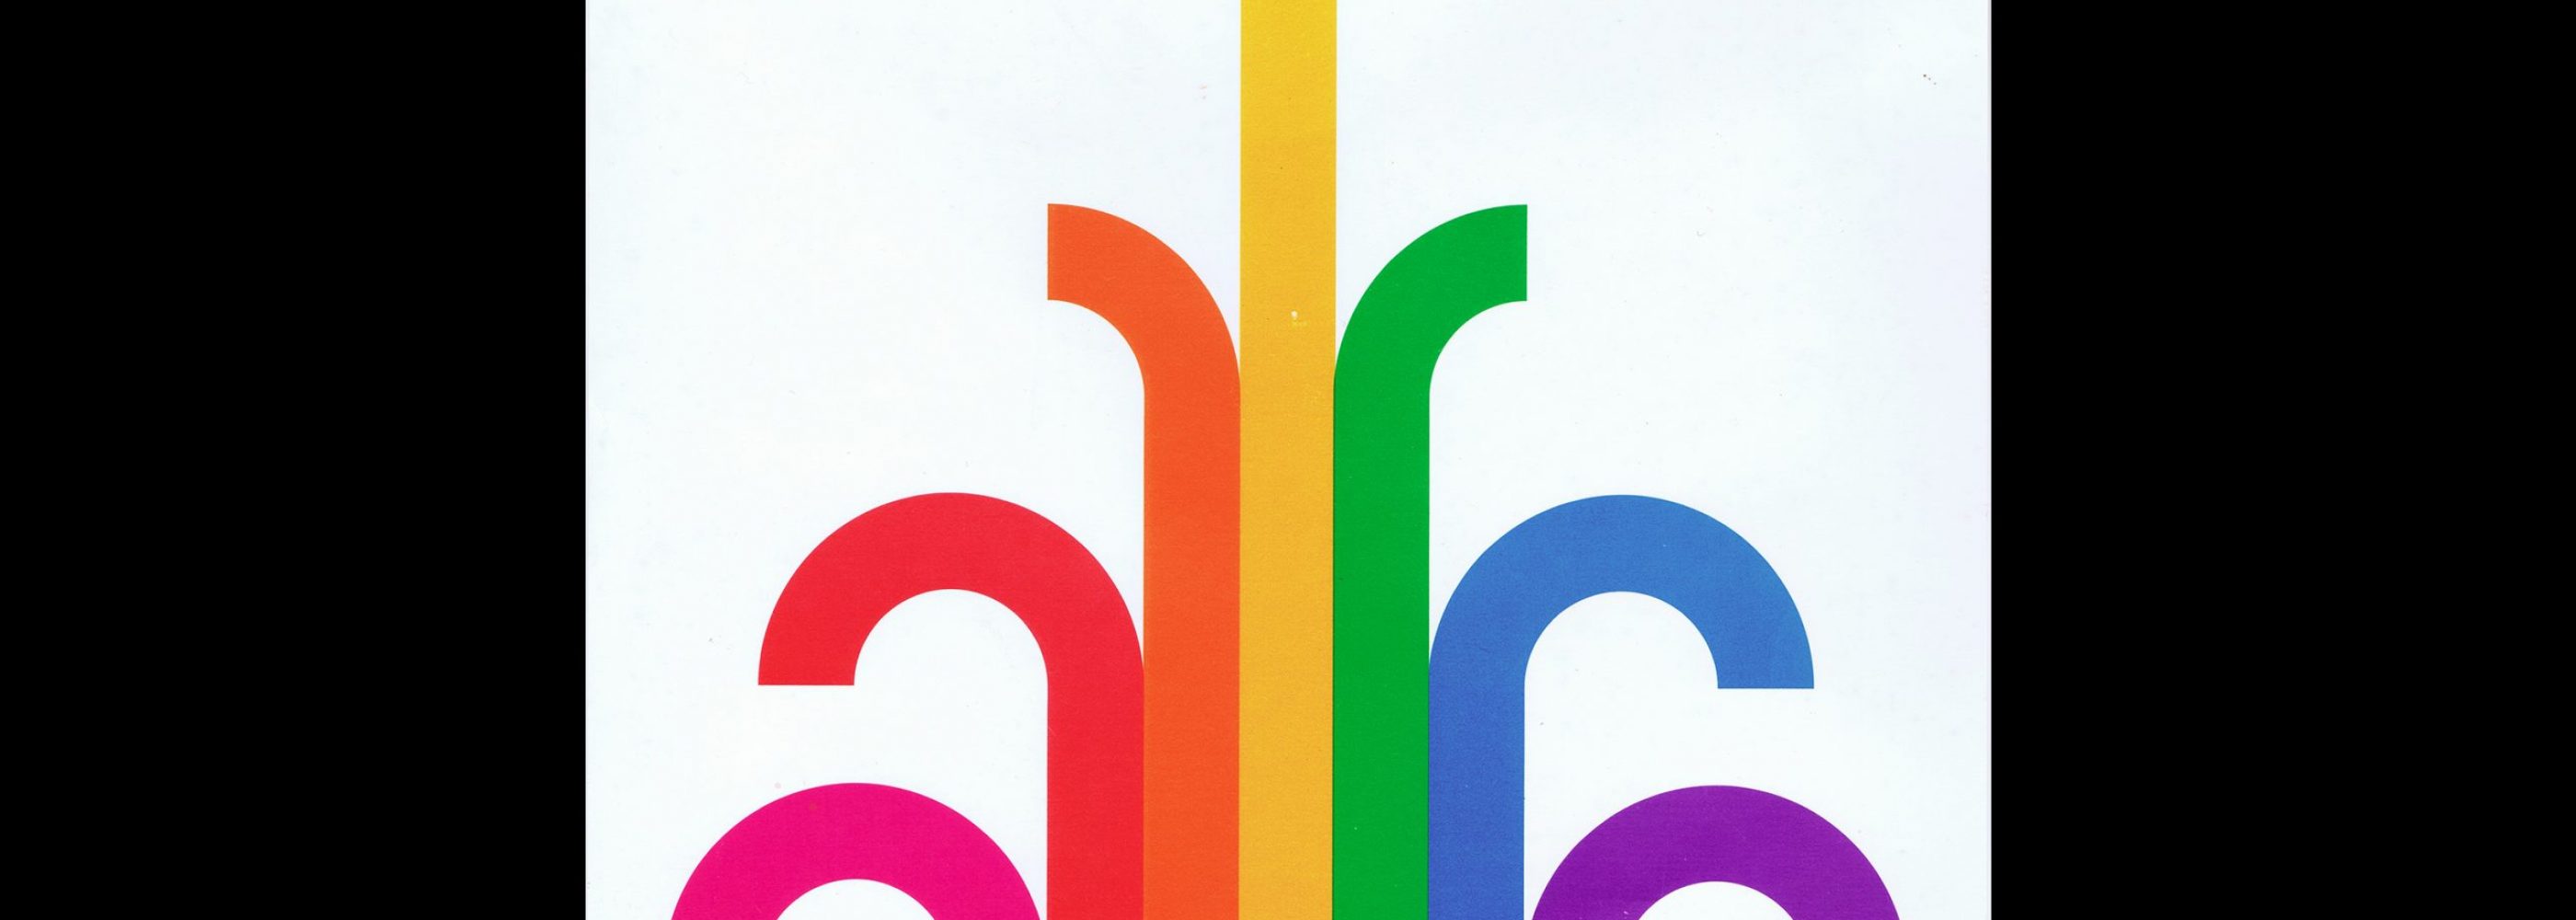 Montréal 1976 Olympics, Arts and Culture Program Poster designed by Yvon Laroche (Laroche Pelletier Graphistes)